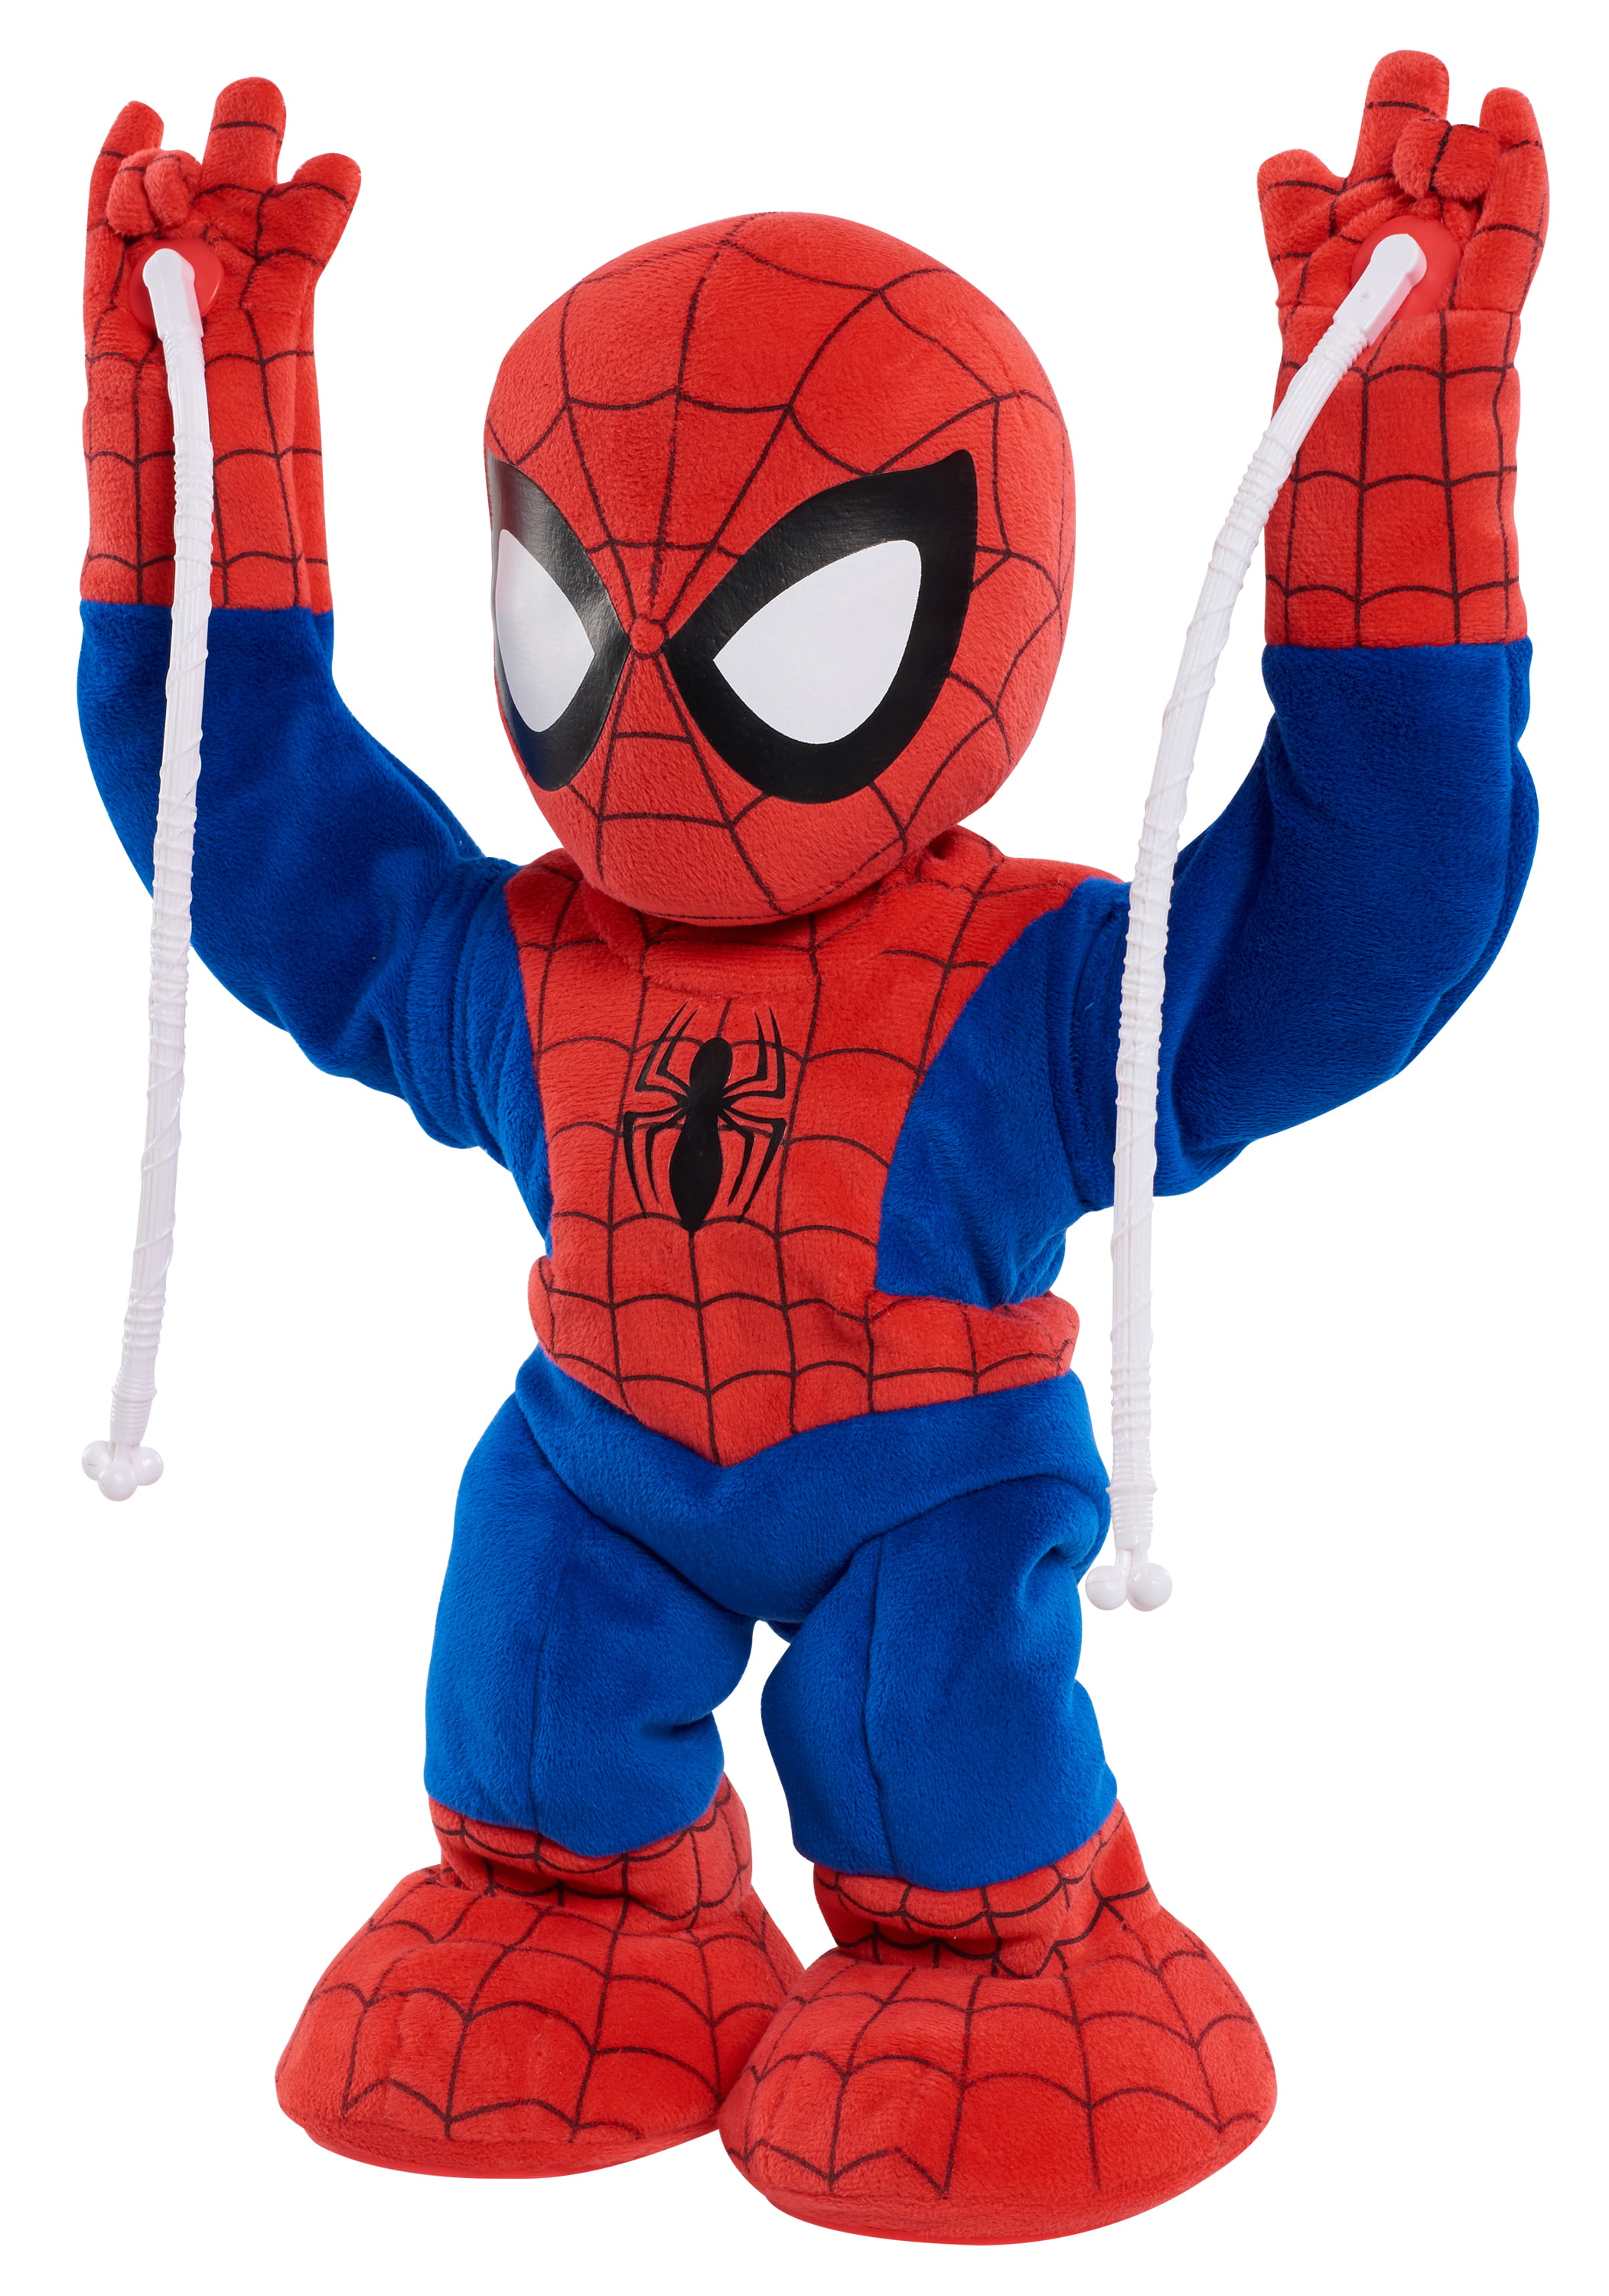 Spidisney Spiderman Toy Gants Marvel Avengers Sandbag Set Peluche